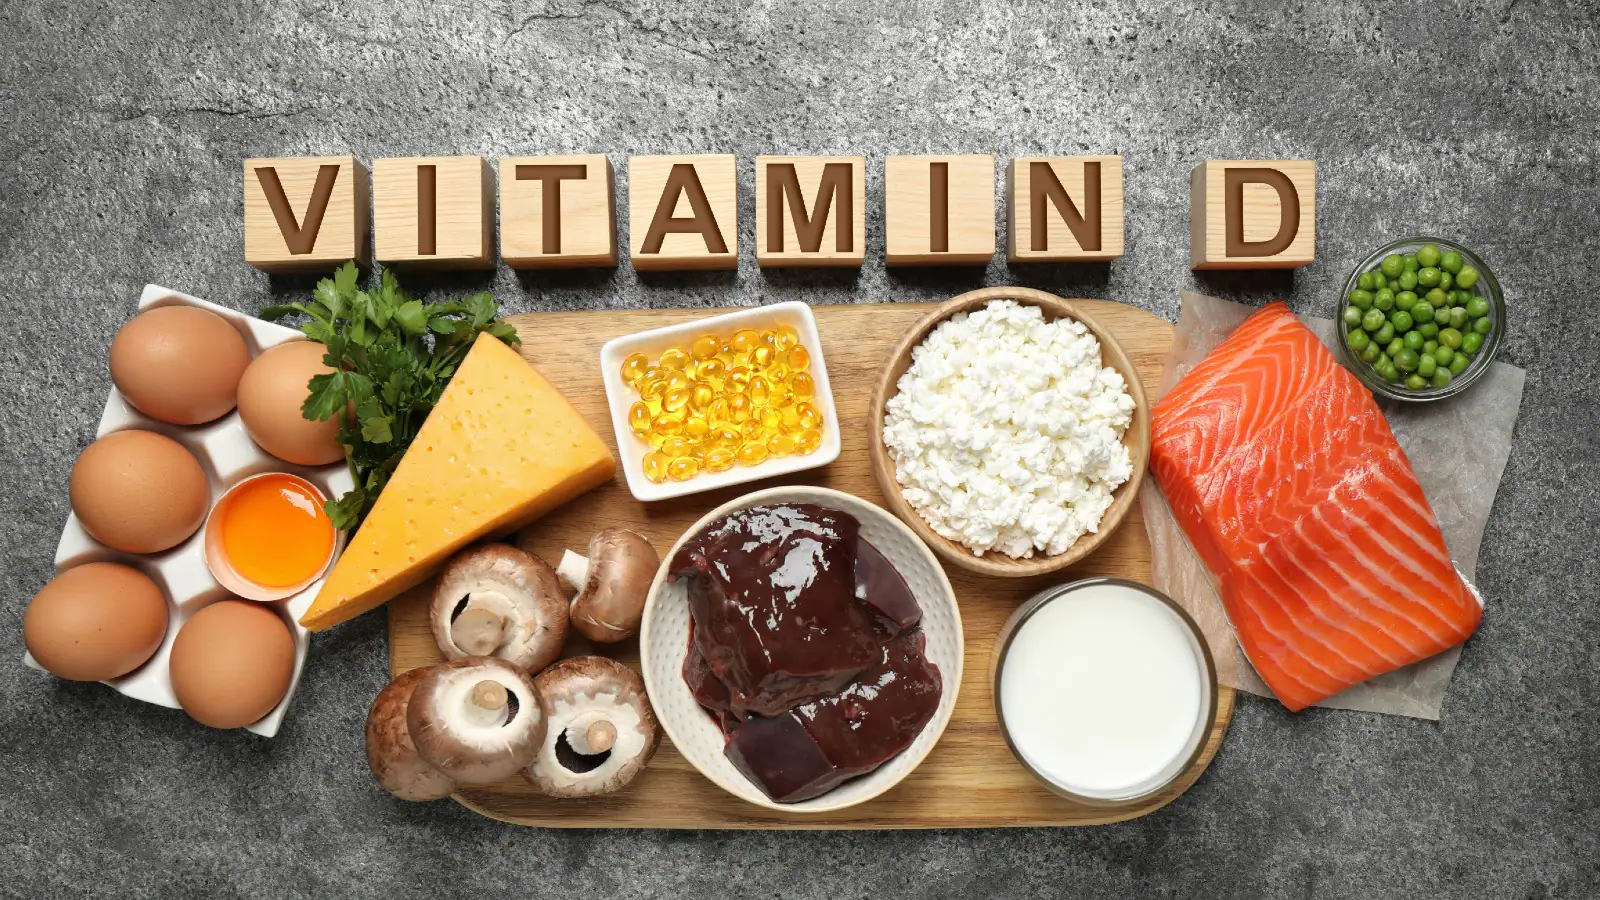 Vitamin-d-foods